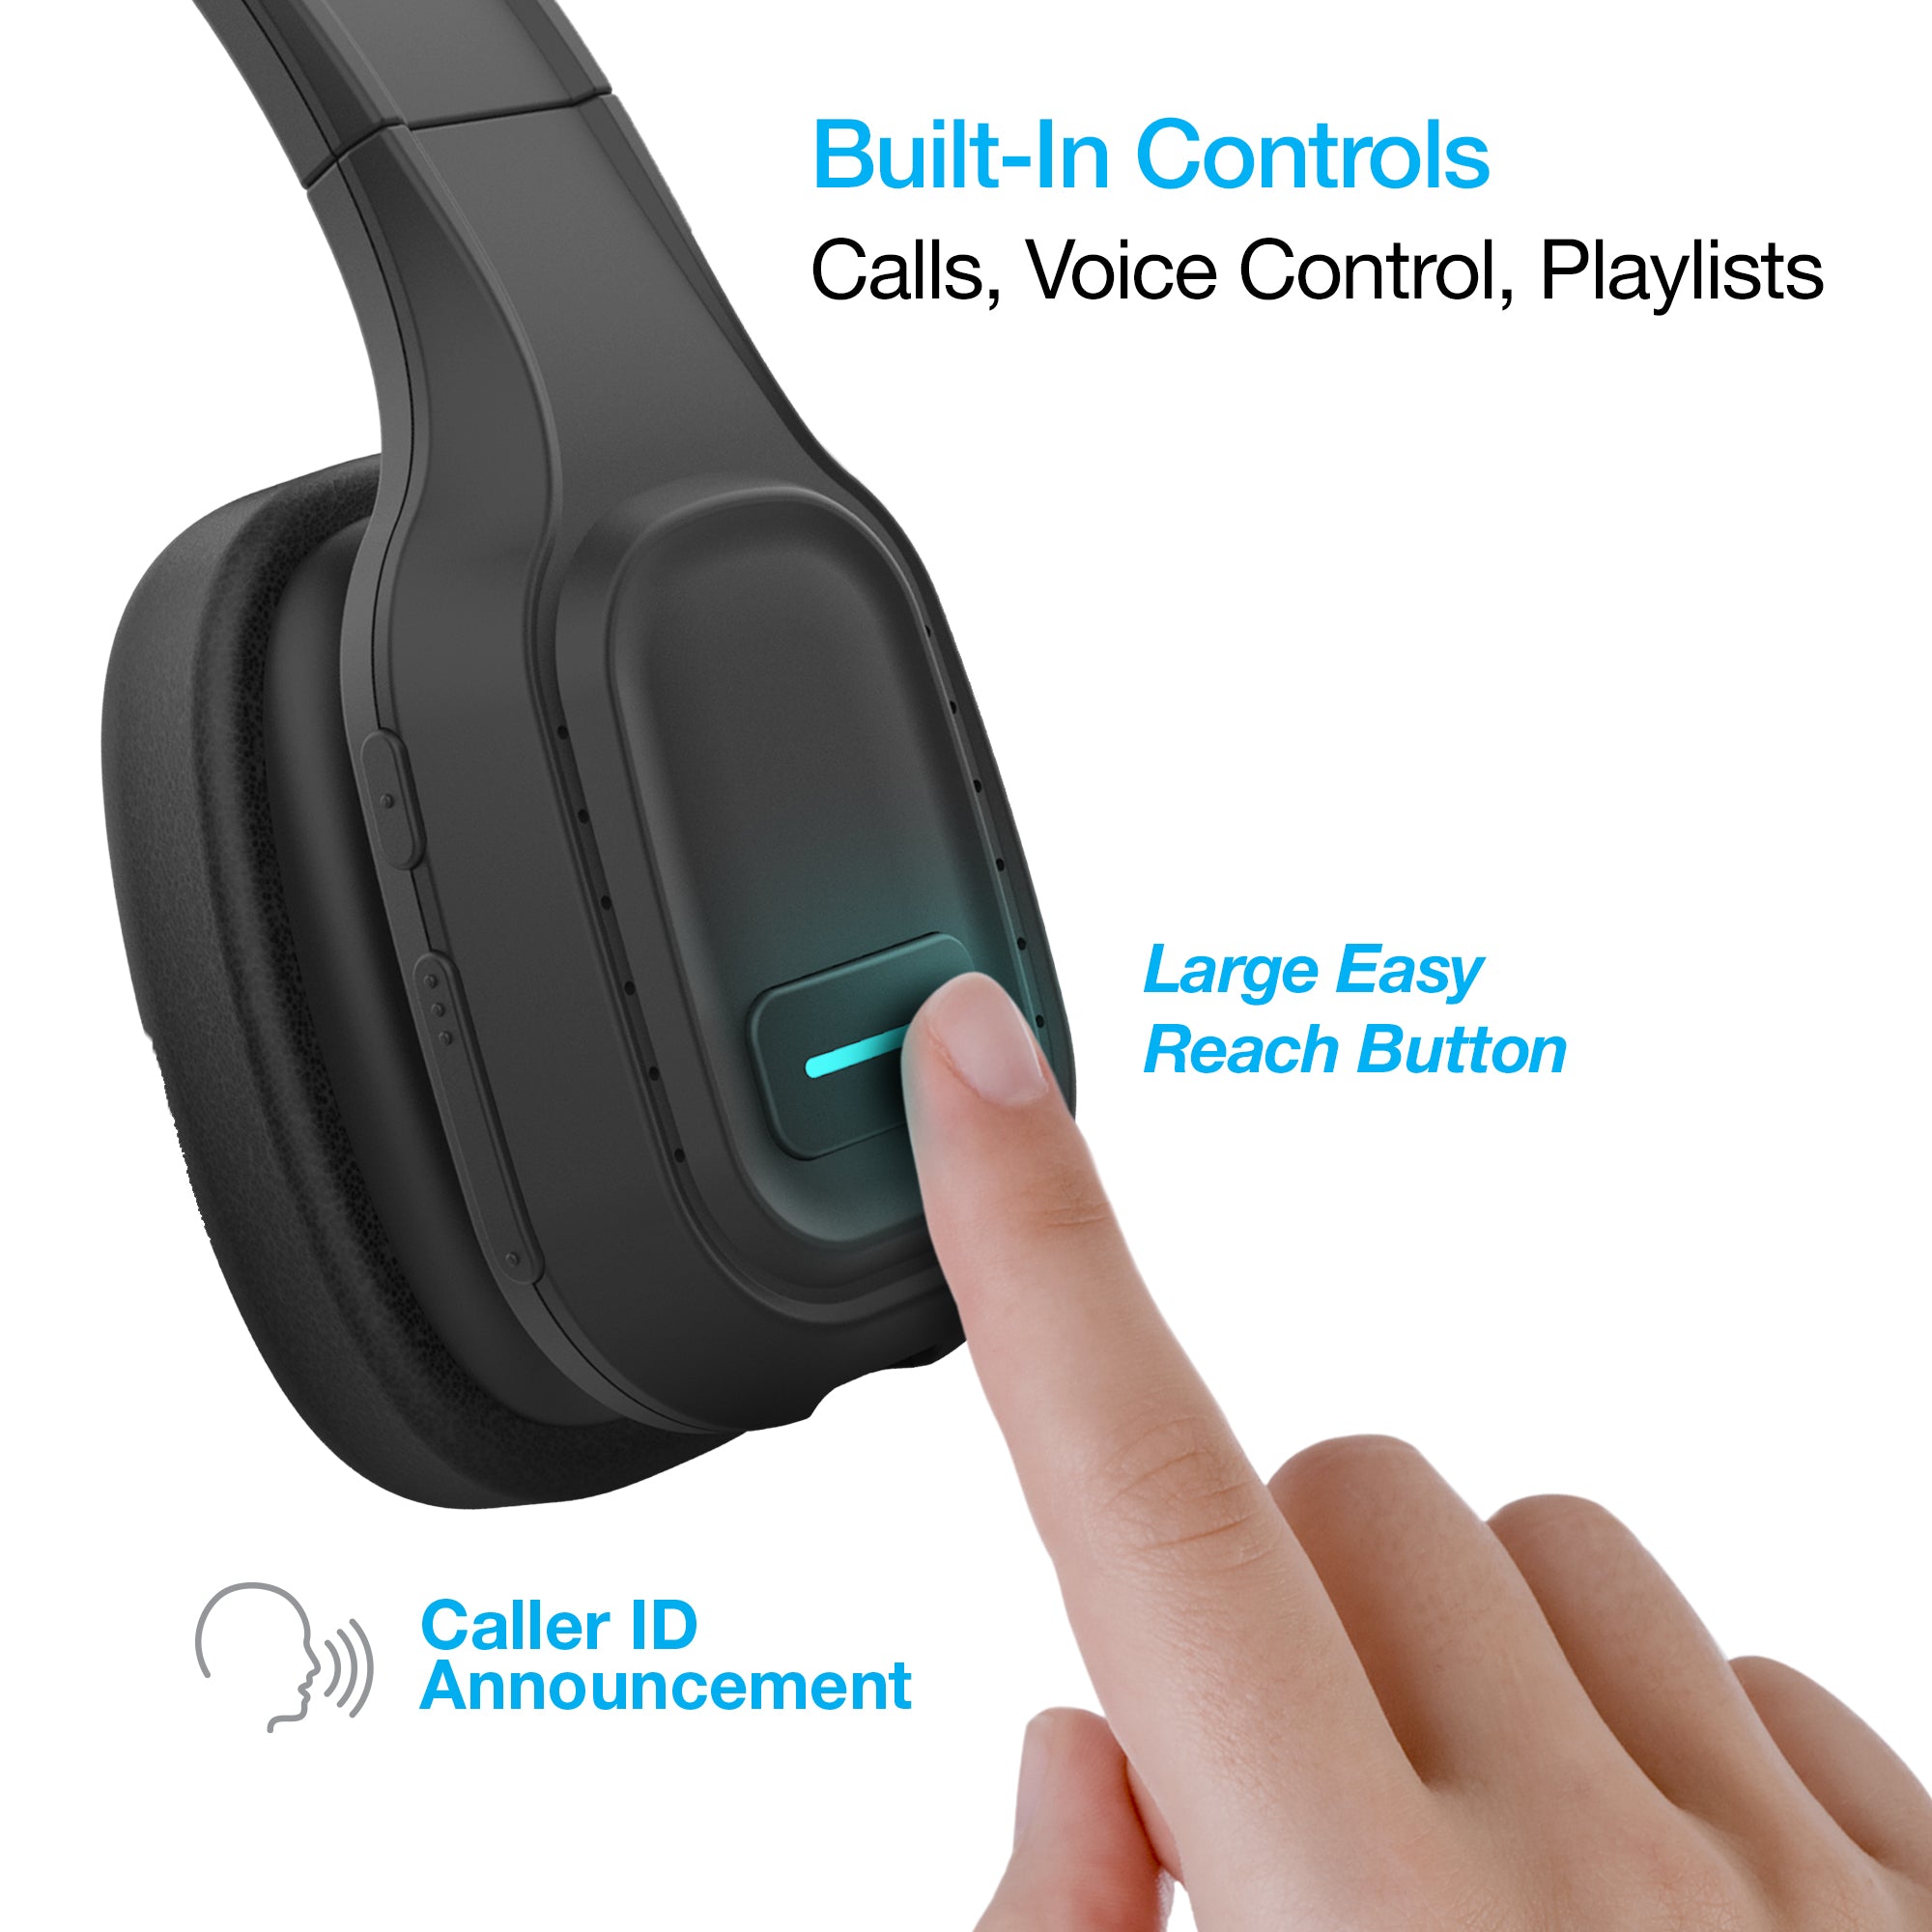 Wireless Bluetooth Headset with Mic Hypercel – Naztech.com